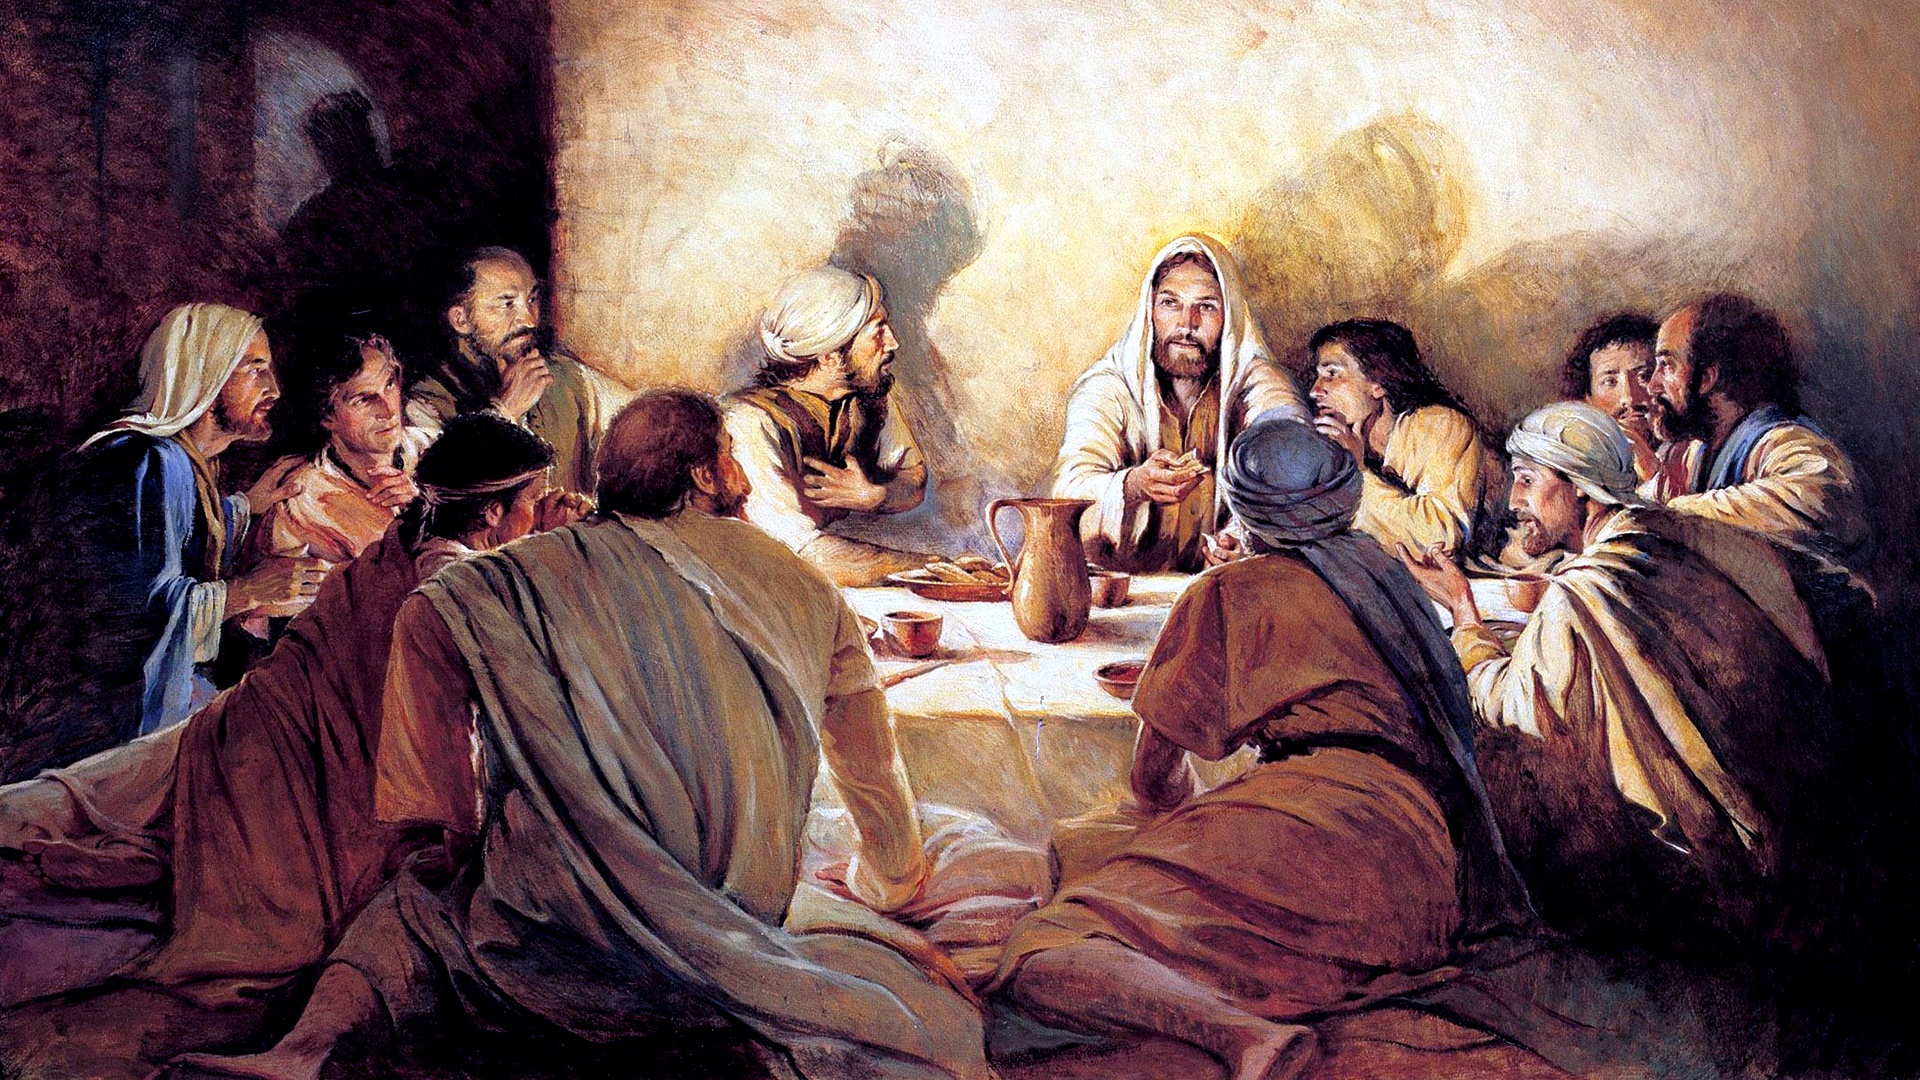 Jesus Painting Religious 1920x1080